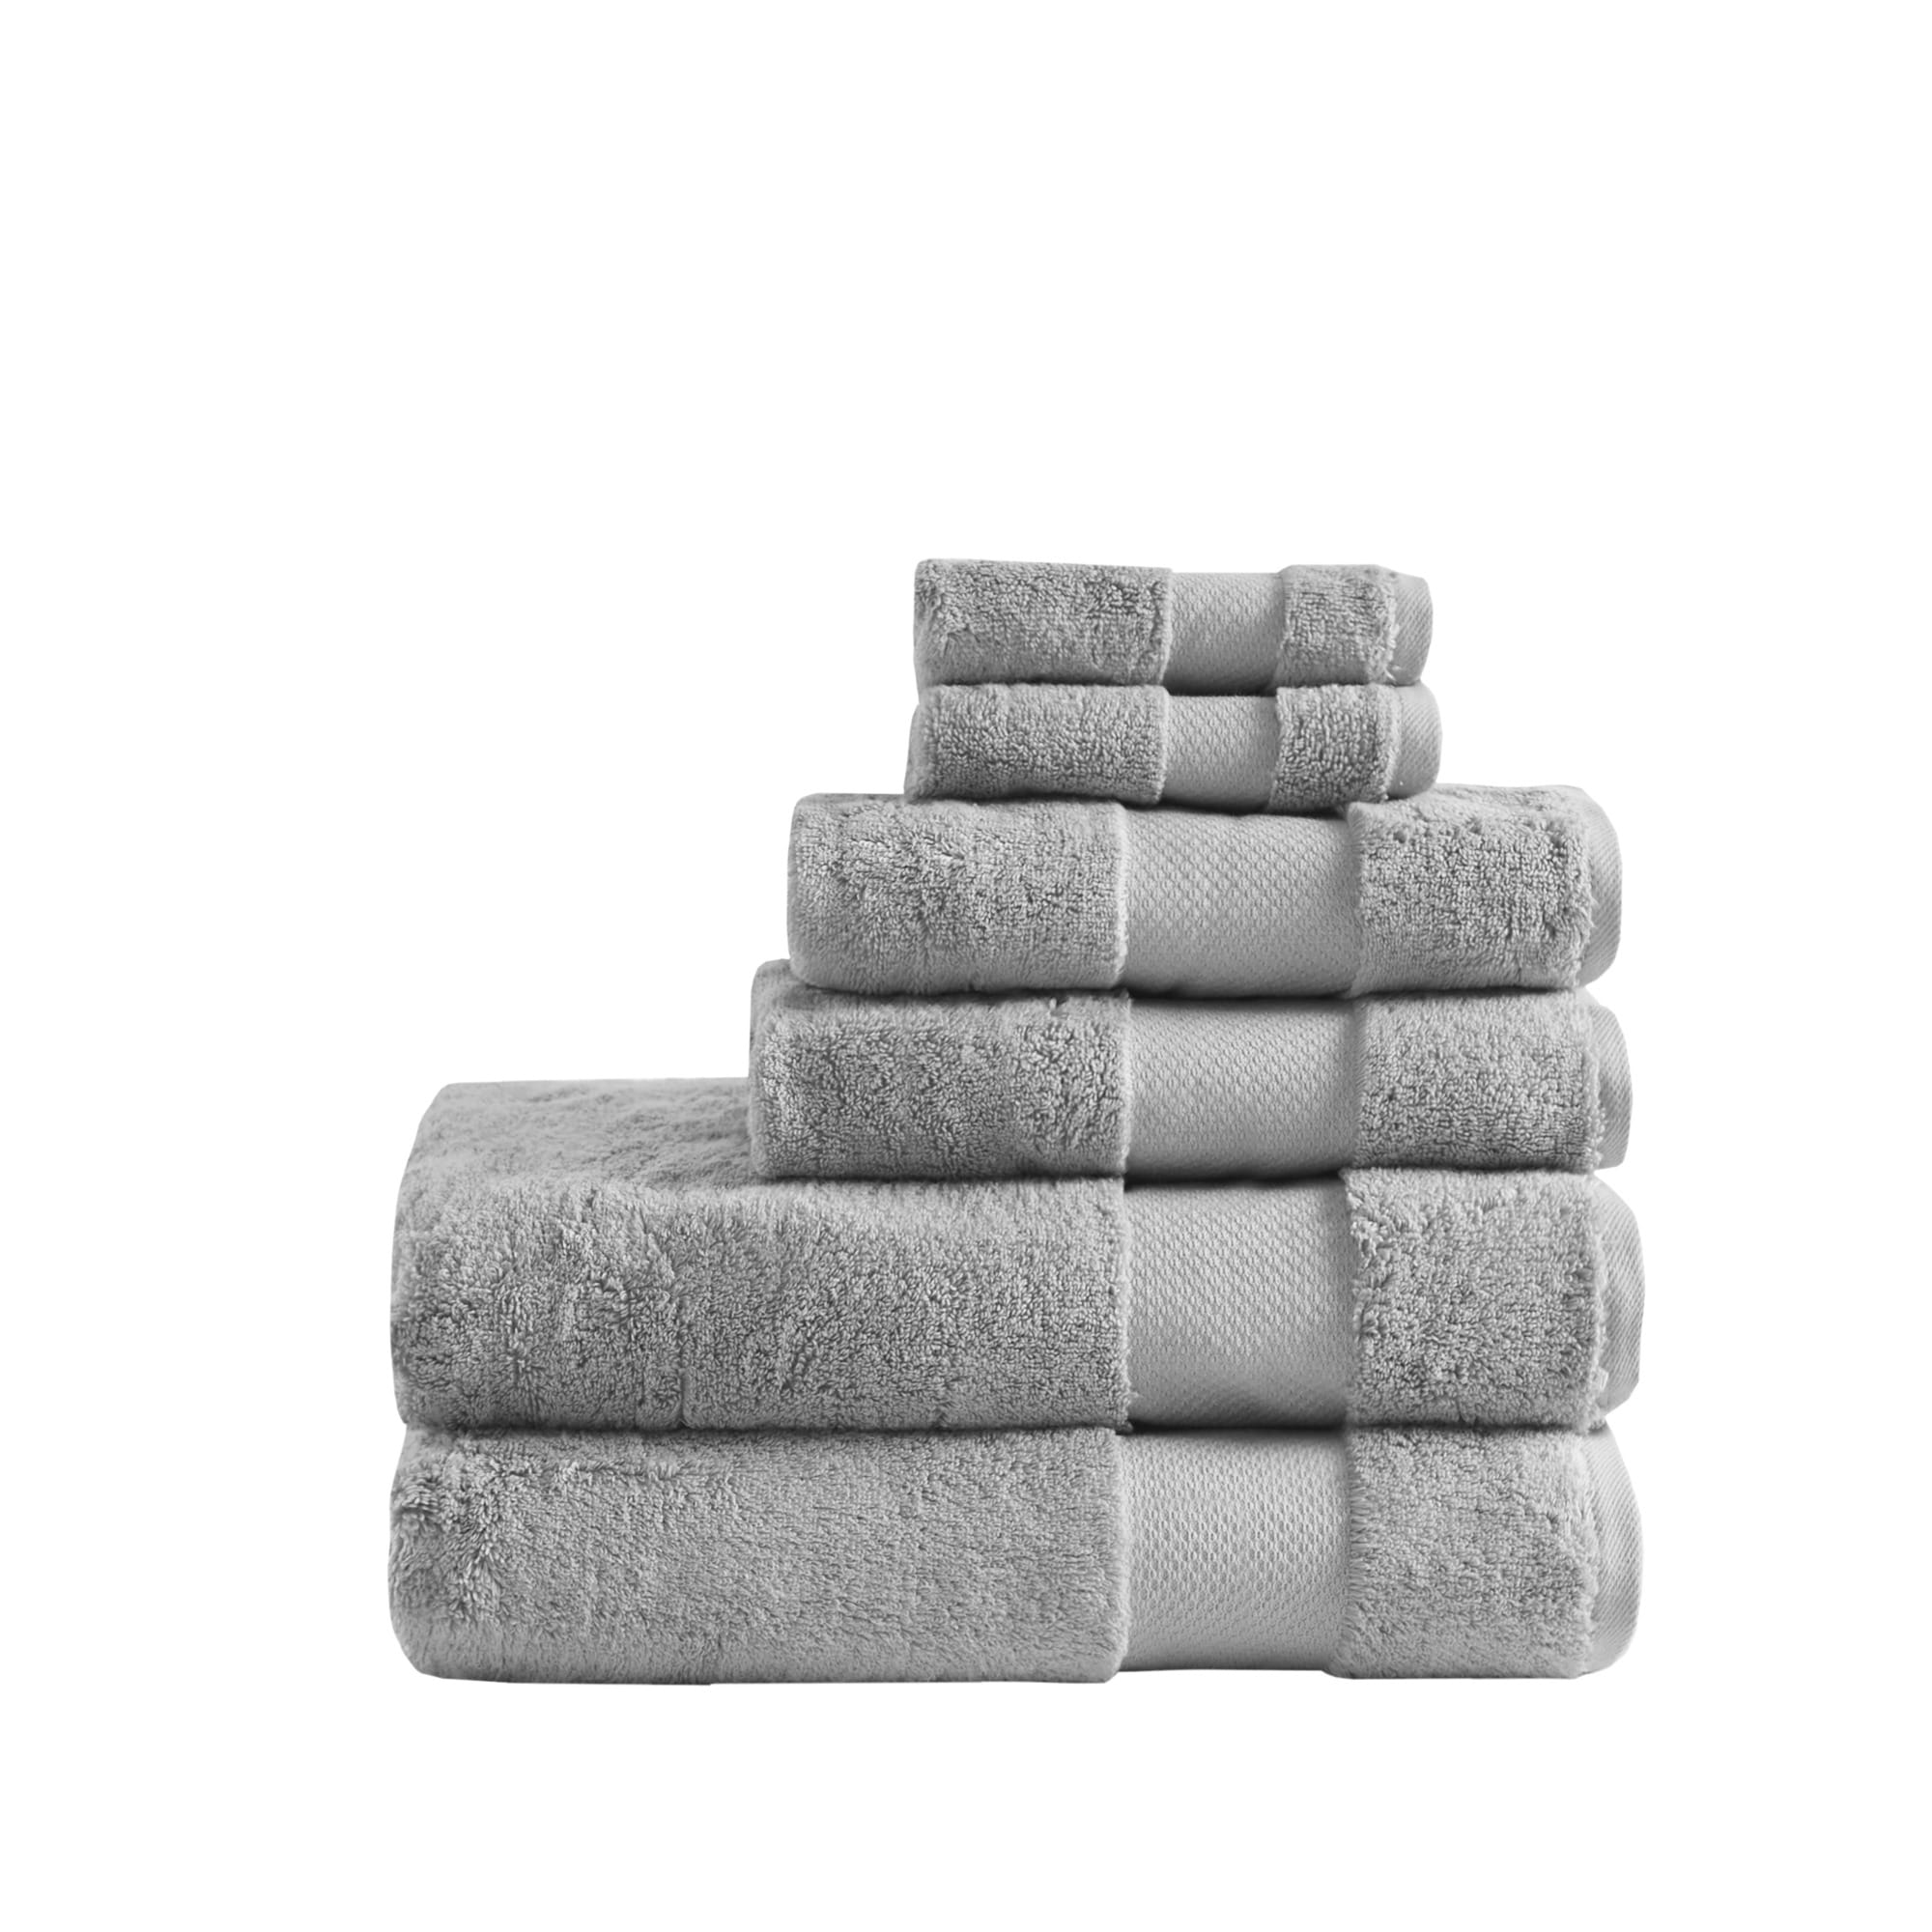 https://ak1.ostkcdn.com/images/products/is/images/direct/8a543681758ac581a79347f22e7ade43d37822ea/Madison-Park-Signature-Turkish-Cotton-6-Piece-Bath-Towel-Set.jpg